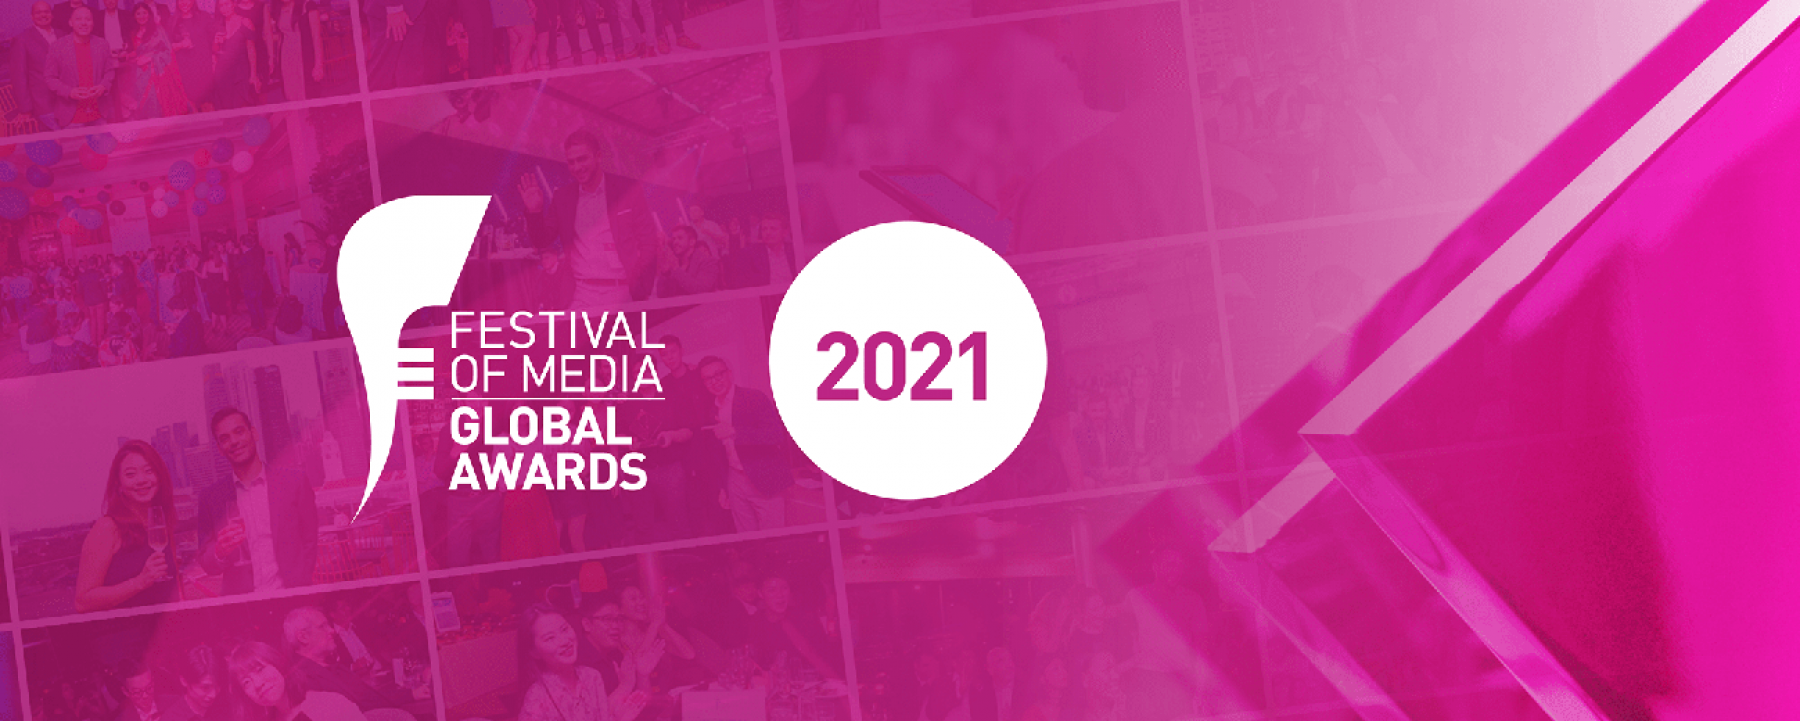 Festival of Media Global Awards 2021 le 27 avril 2021